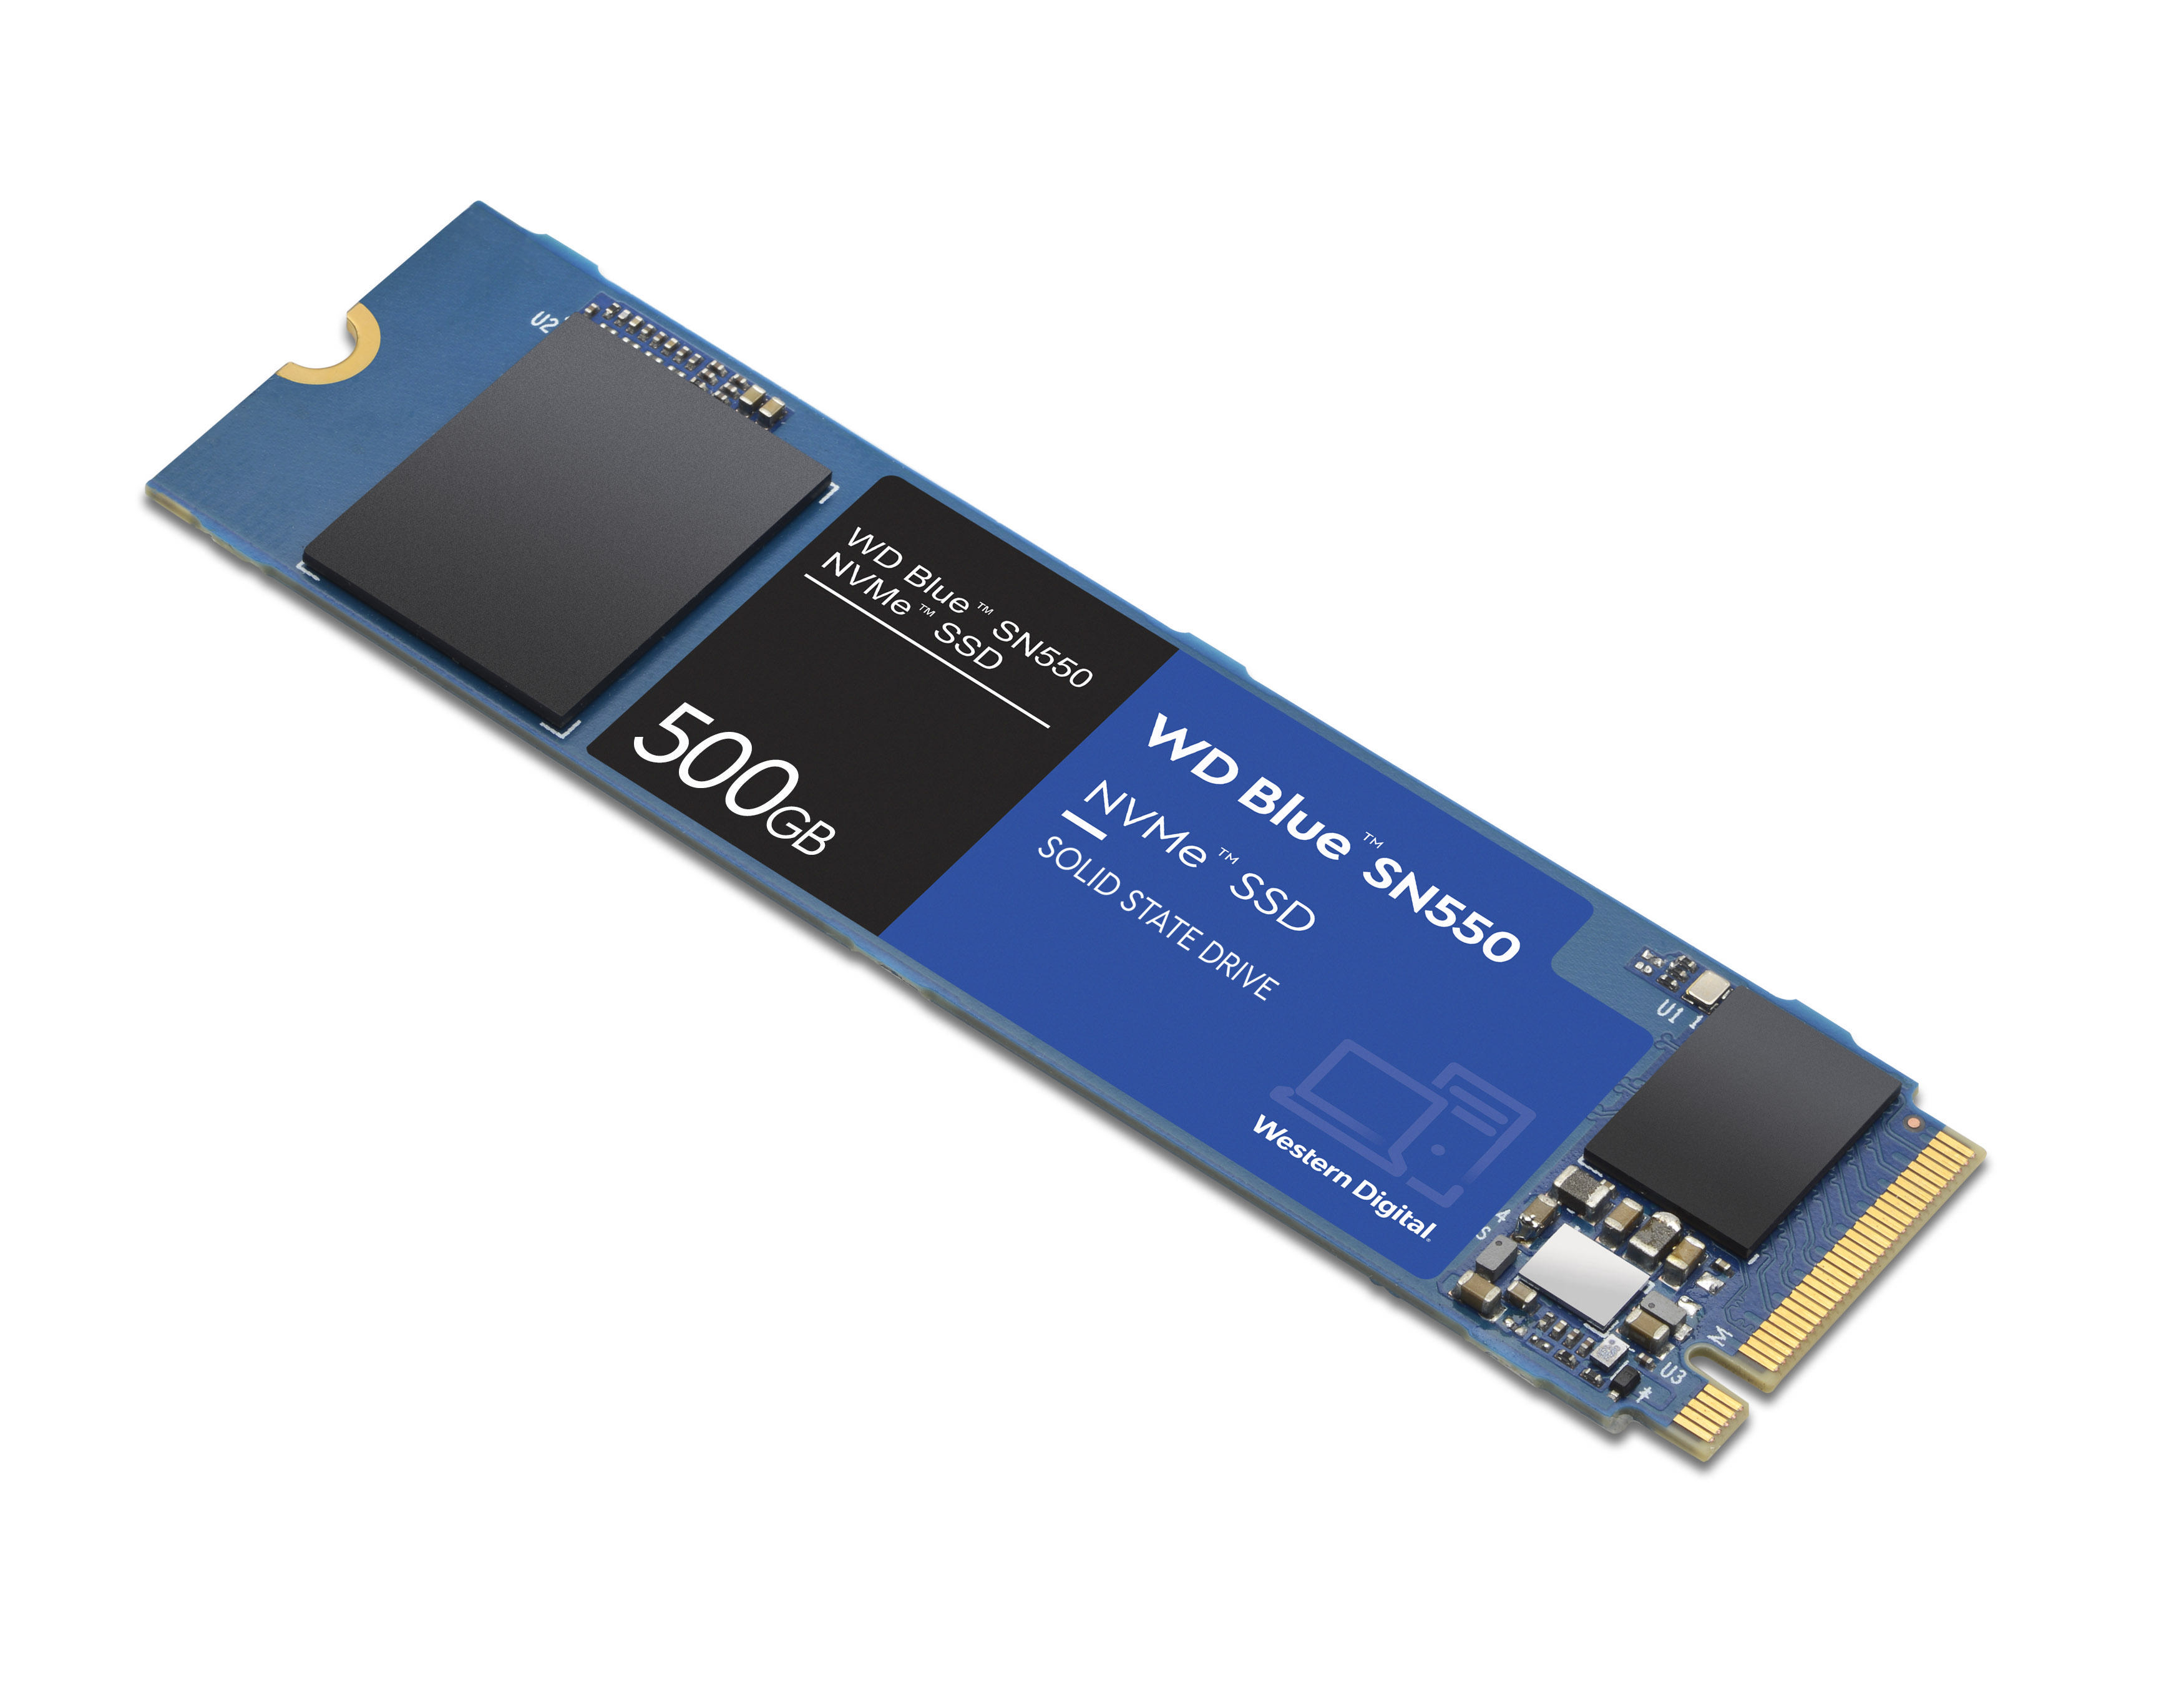 WD Blue™ SN550 500 M.2 Speicher, intern PCIe, GB SSD via